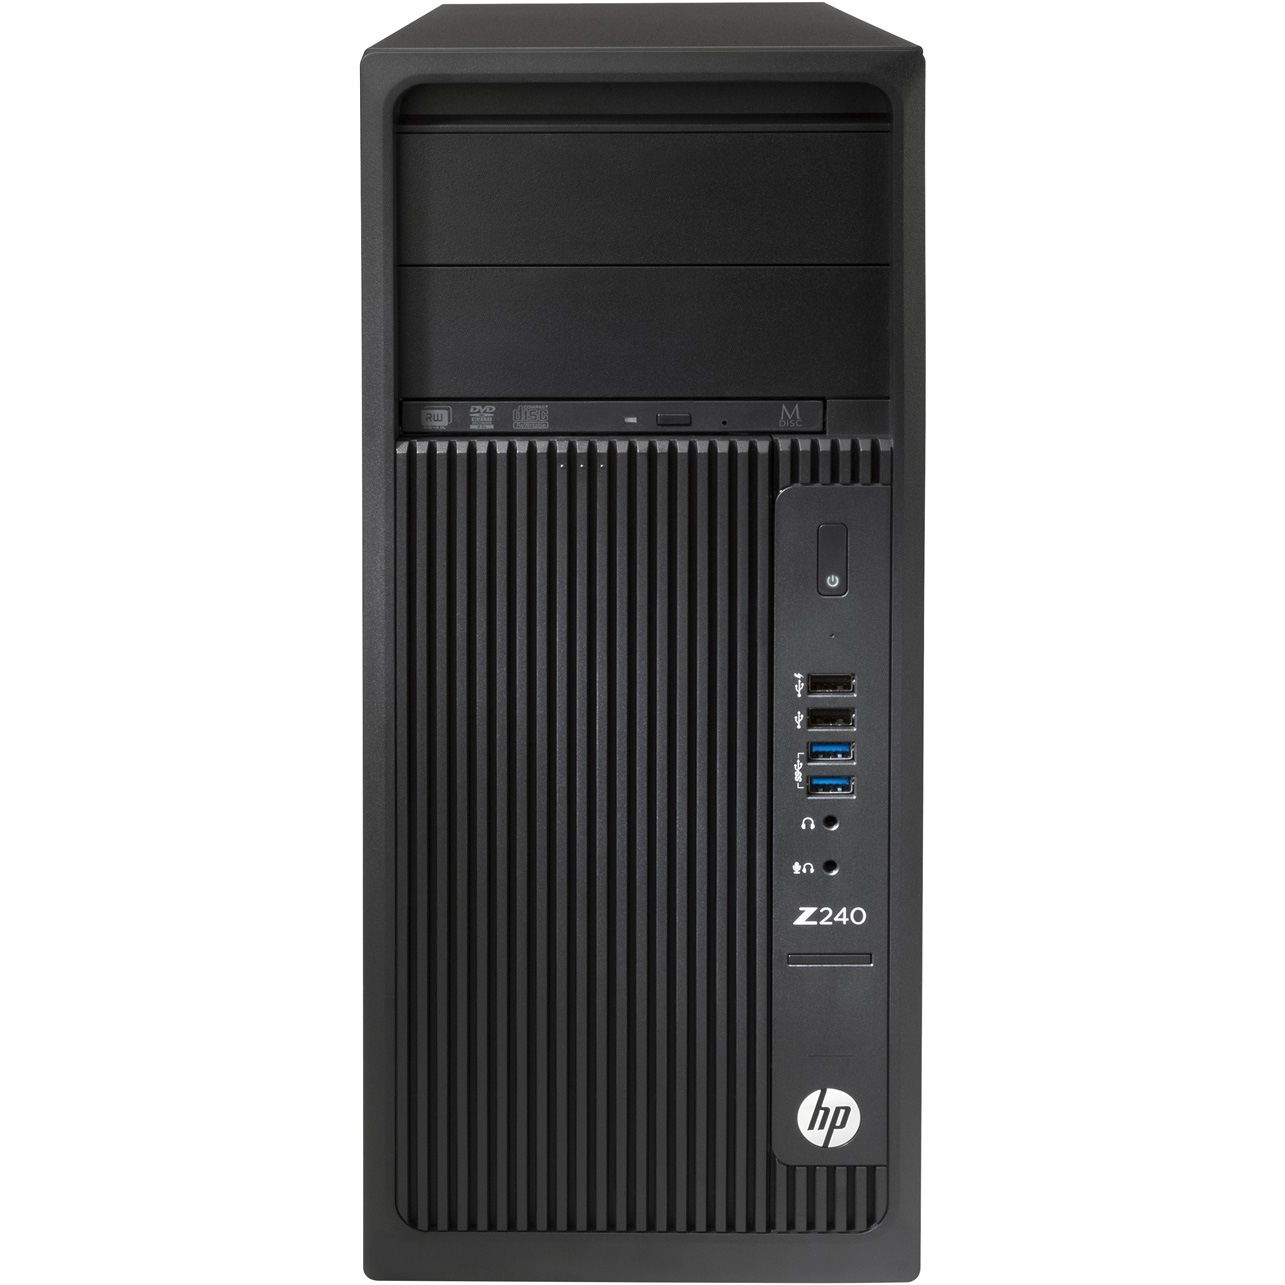  Sistem Desktop PC HP Z240, Intel Xeon E3-1234v5, 16GB DDR4, HDD 2TB, nVidia Quadro K620 2GB, Windows 10 Pro 